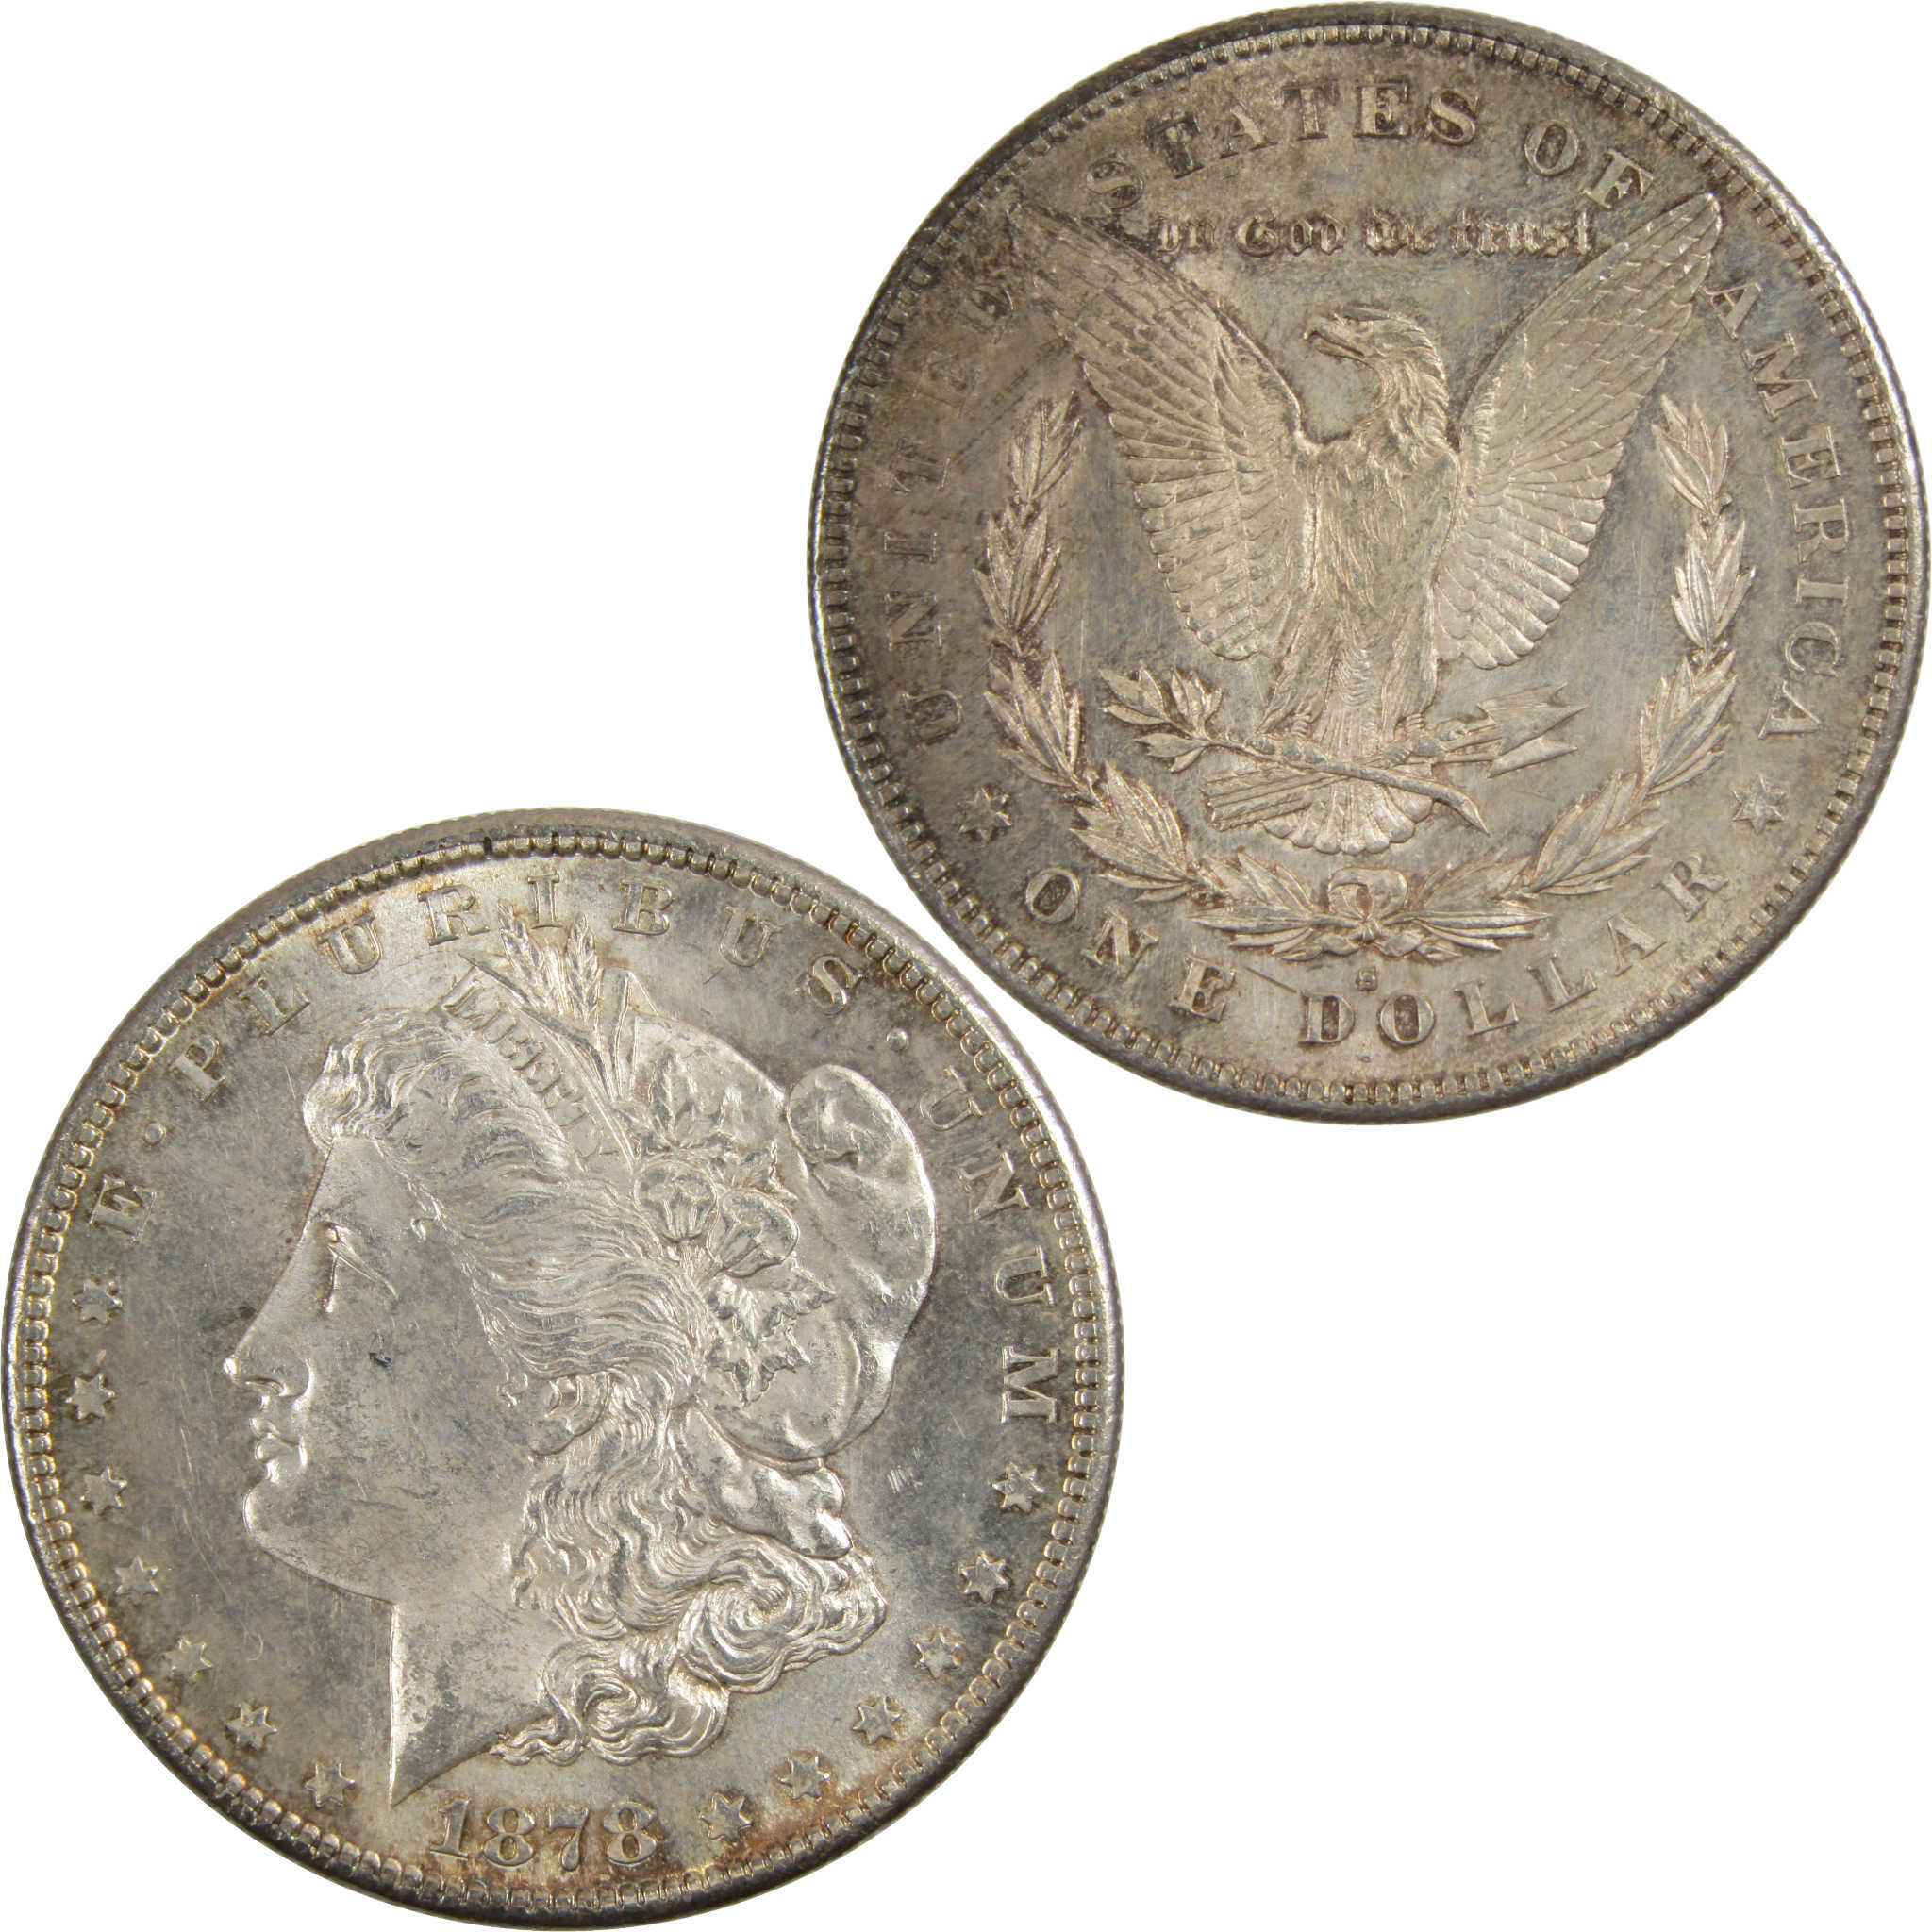 1878 S Morgan Dollar BU Uncirculated 90% Silver $1 Coin SKU:I8127 - Morgan coin - Morgan silver dollar - Morgan silver dollar for sale - Profile Coins &amp; Collectibles